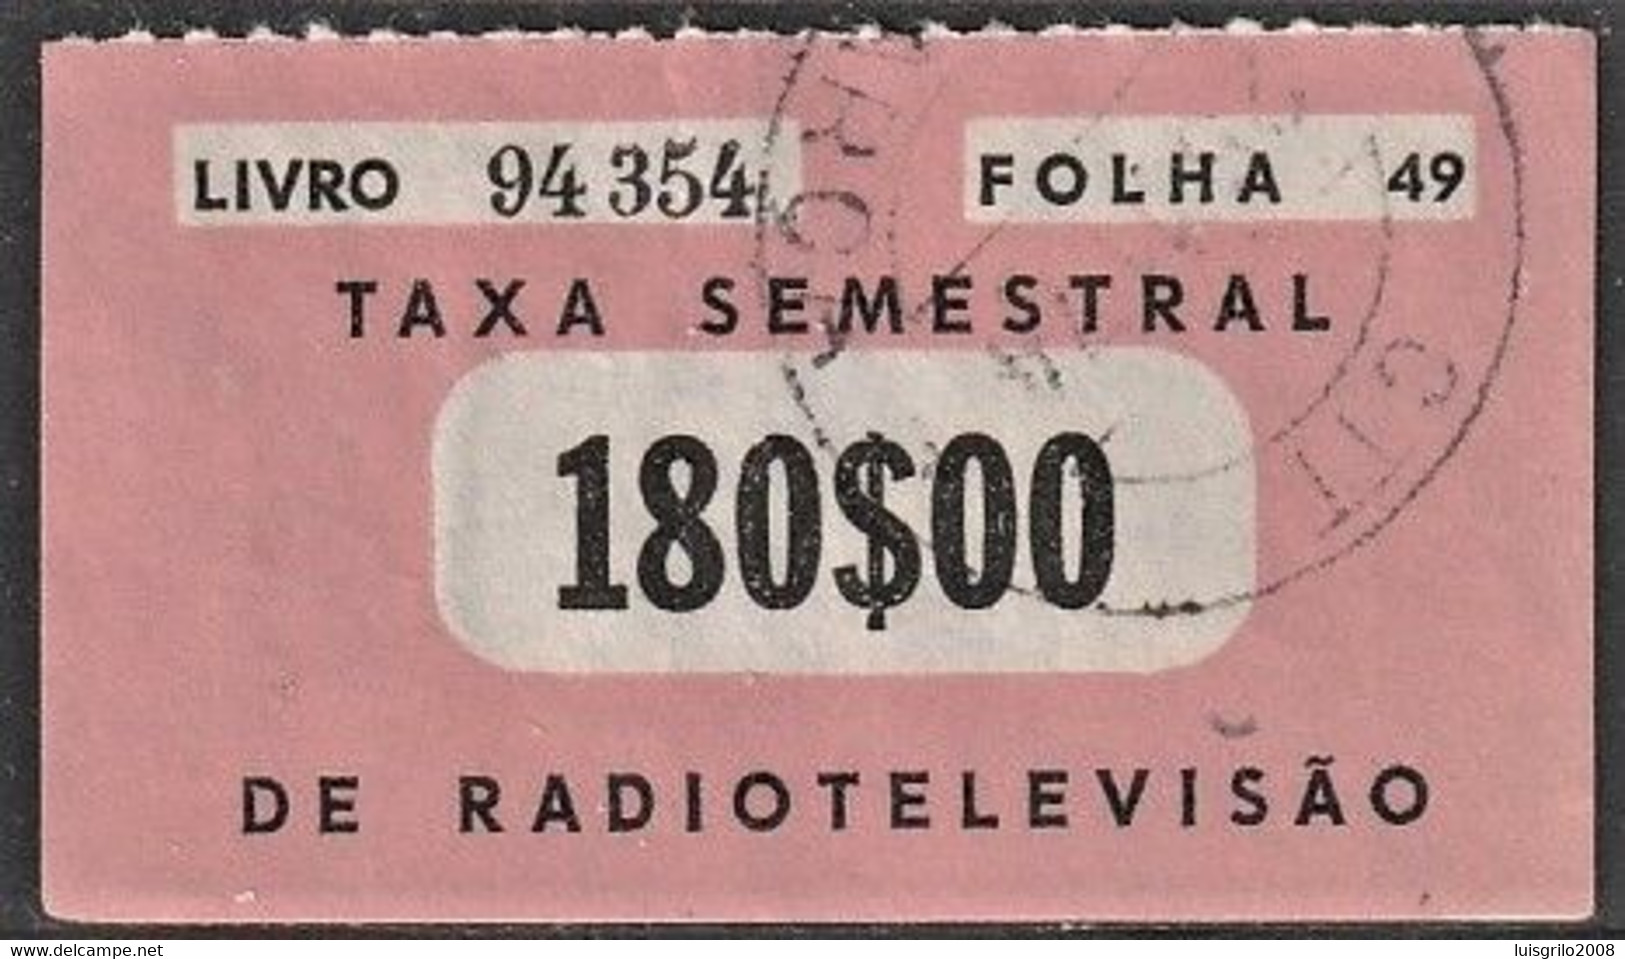 Fiscal/ Revenue, Portugal - Tax/ Taxa De RadioTelevisão -|- 180$00, 1961 - Used Stamps